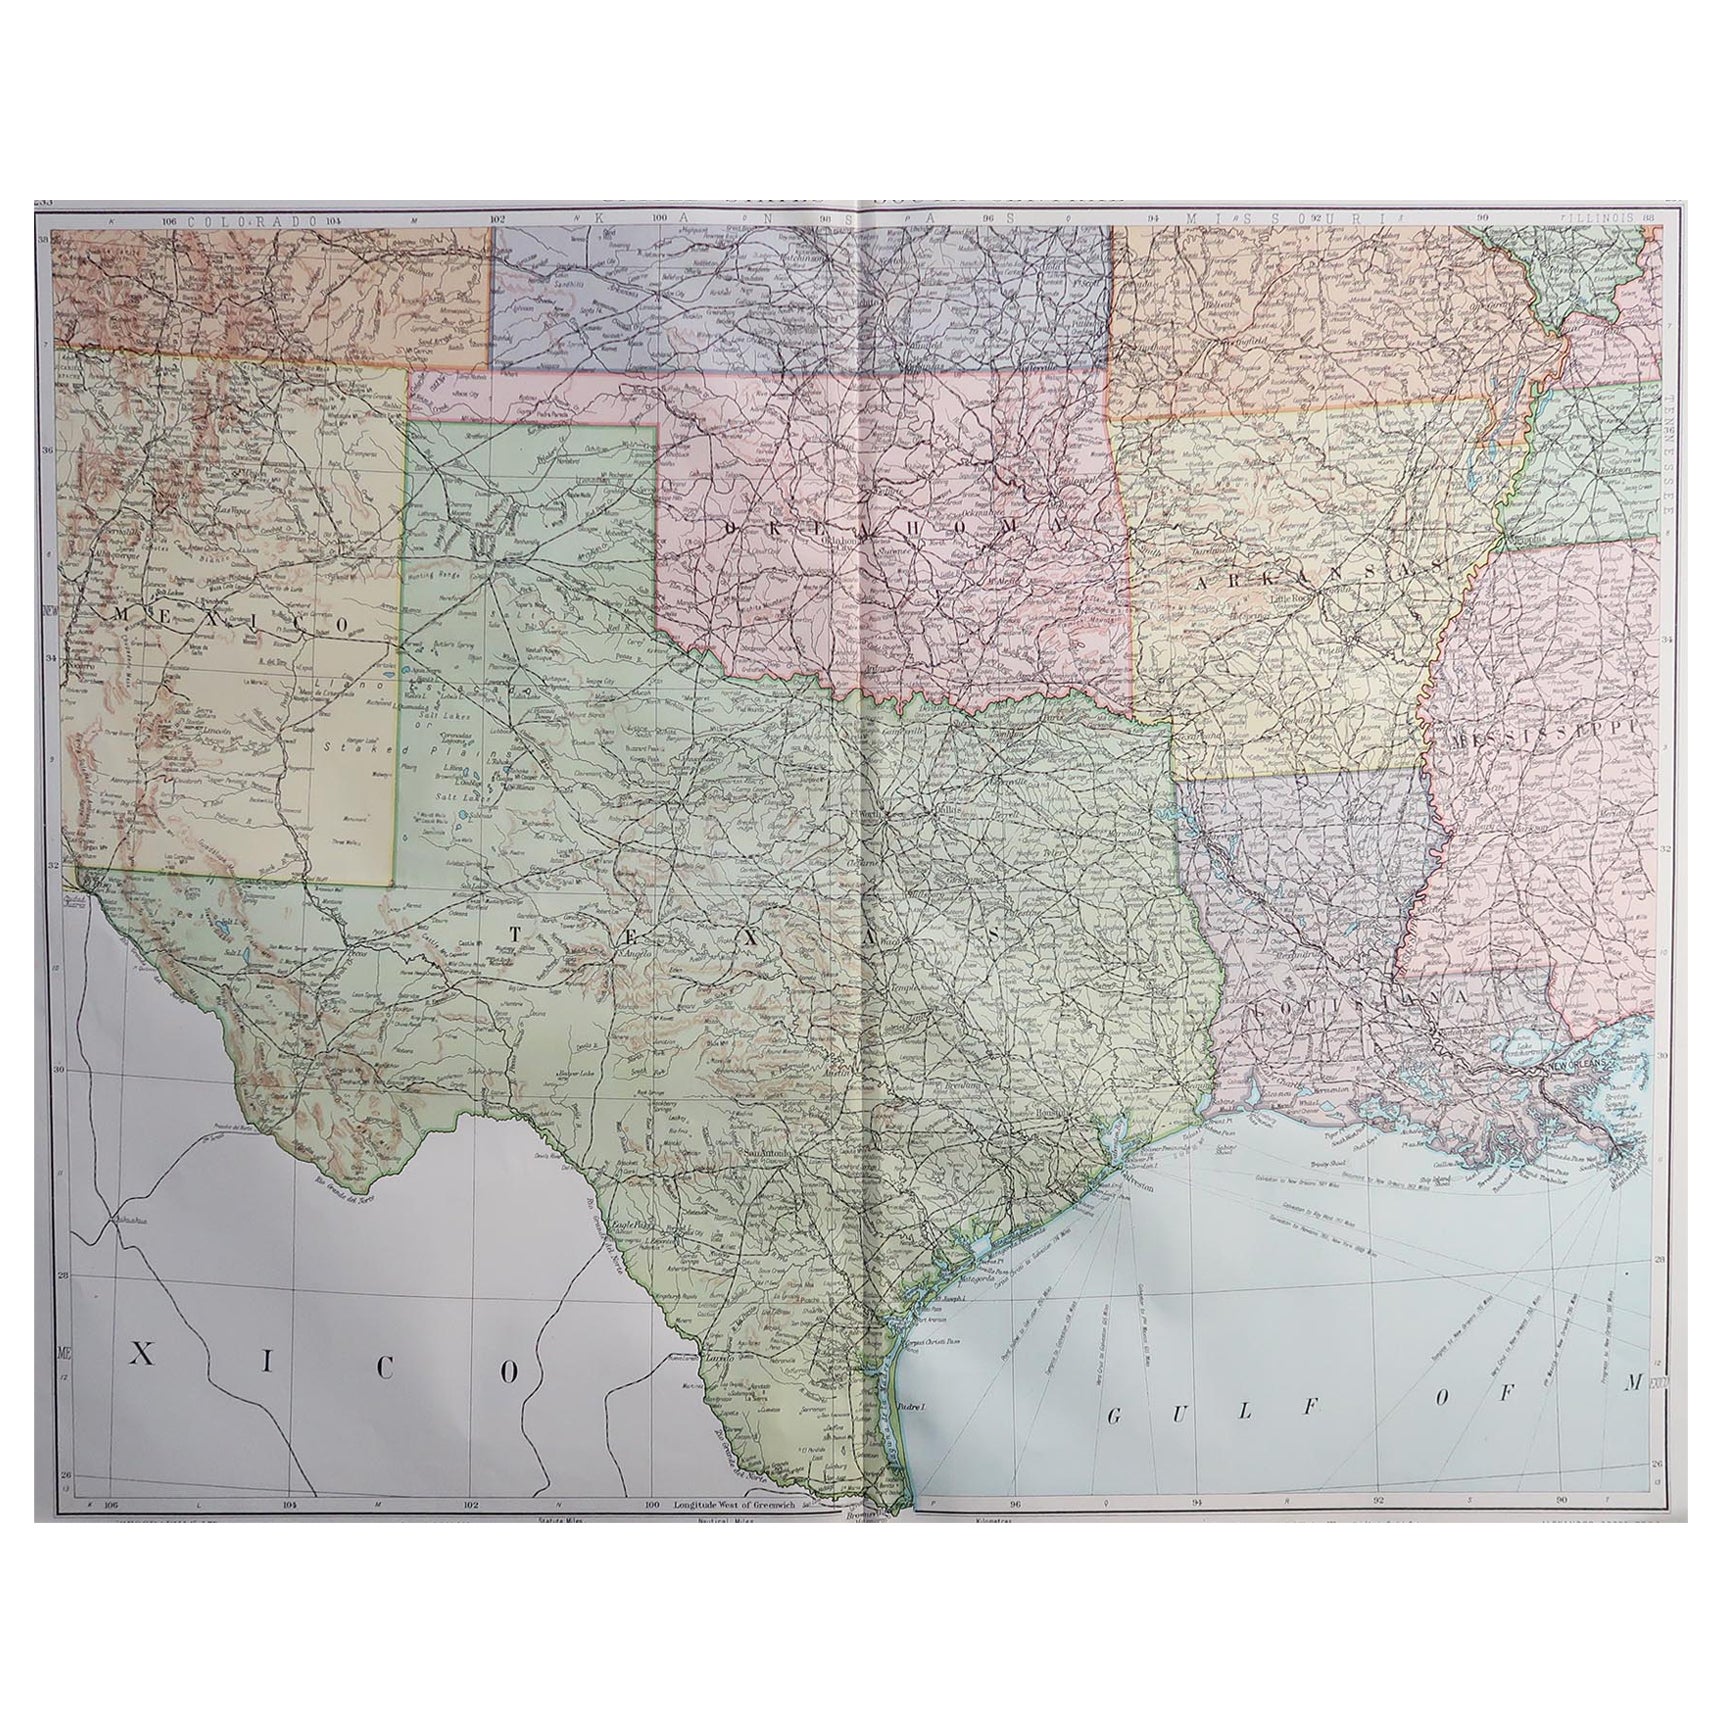 Large Original Vintage Map of Texas and Adjacent States, circa 1920